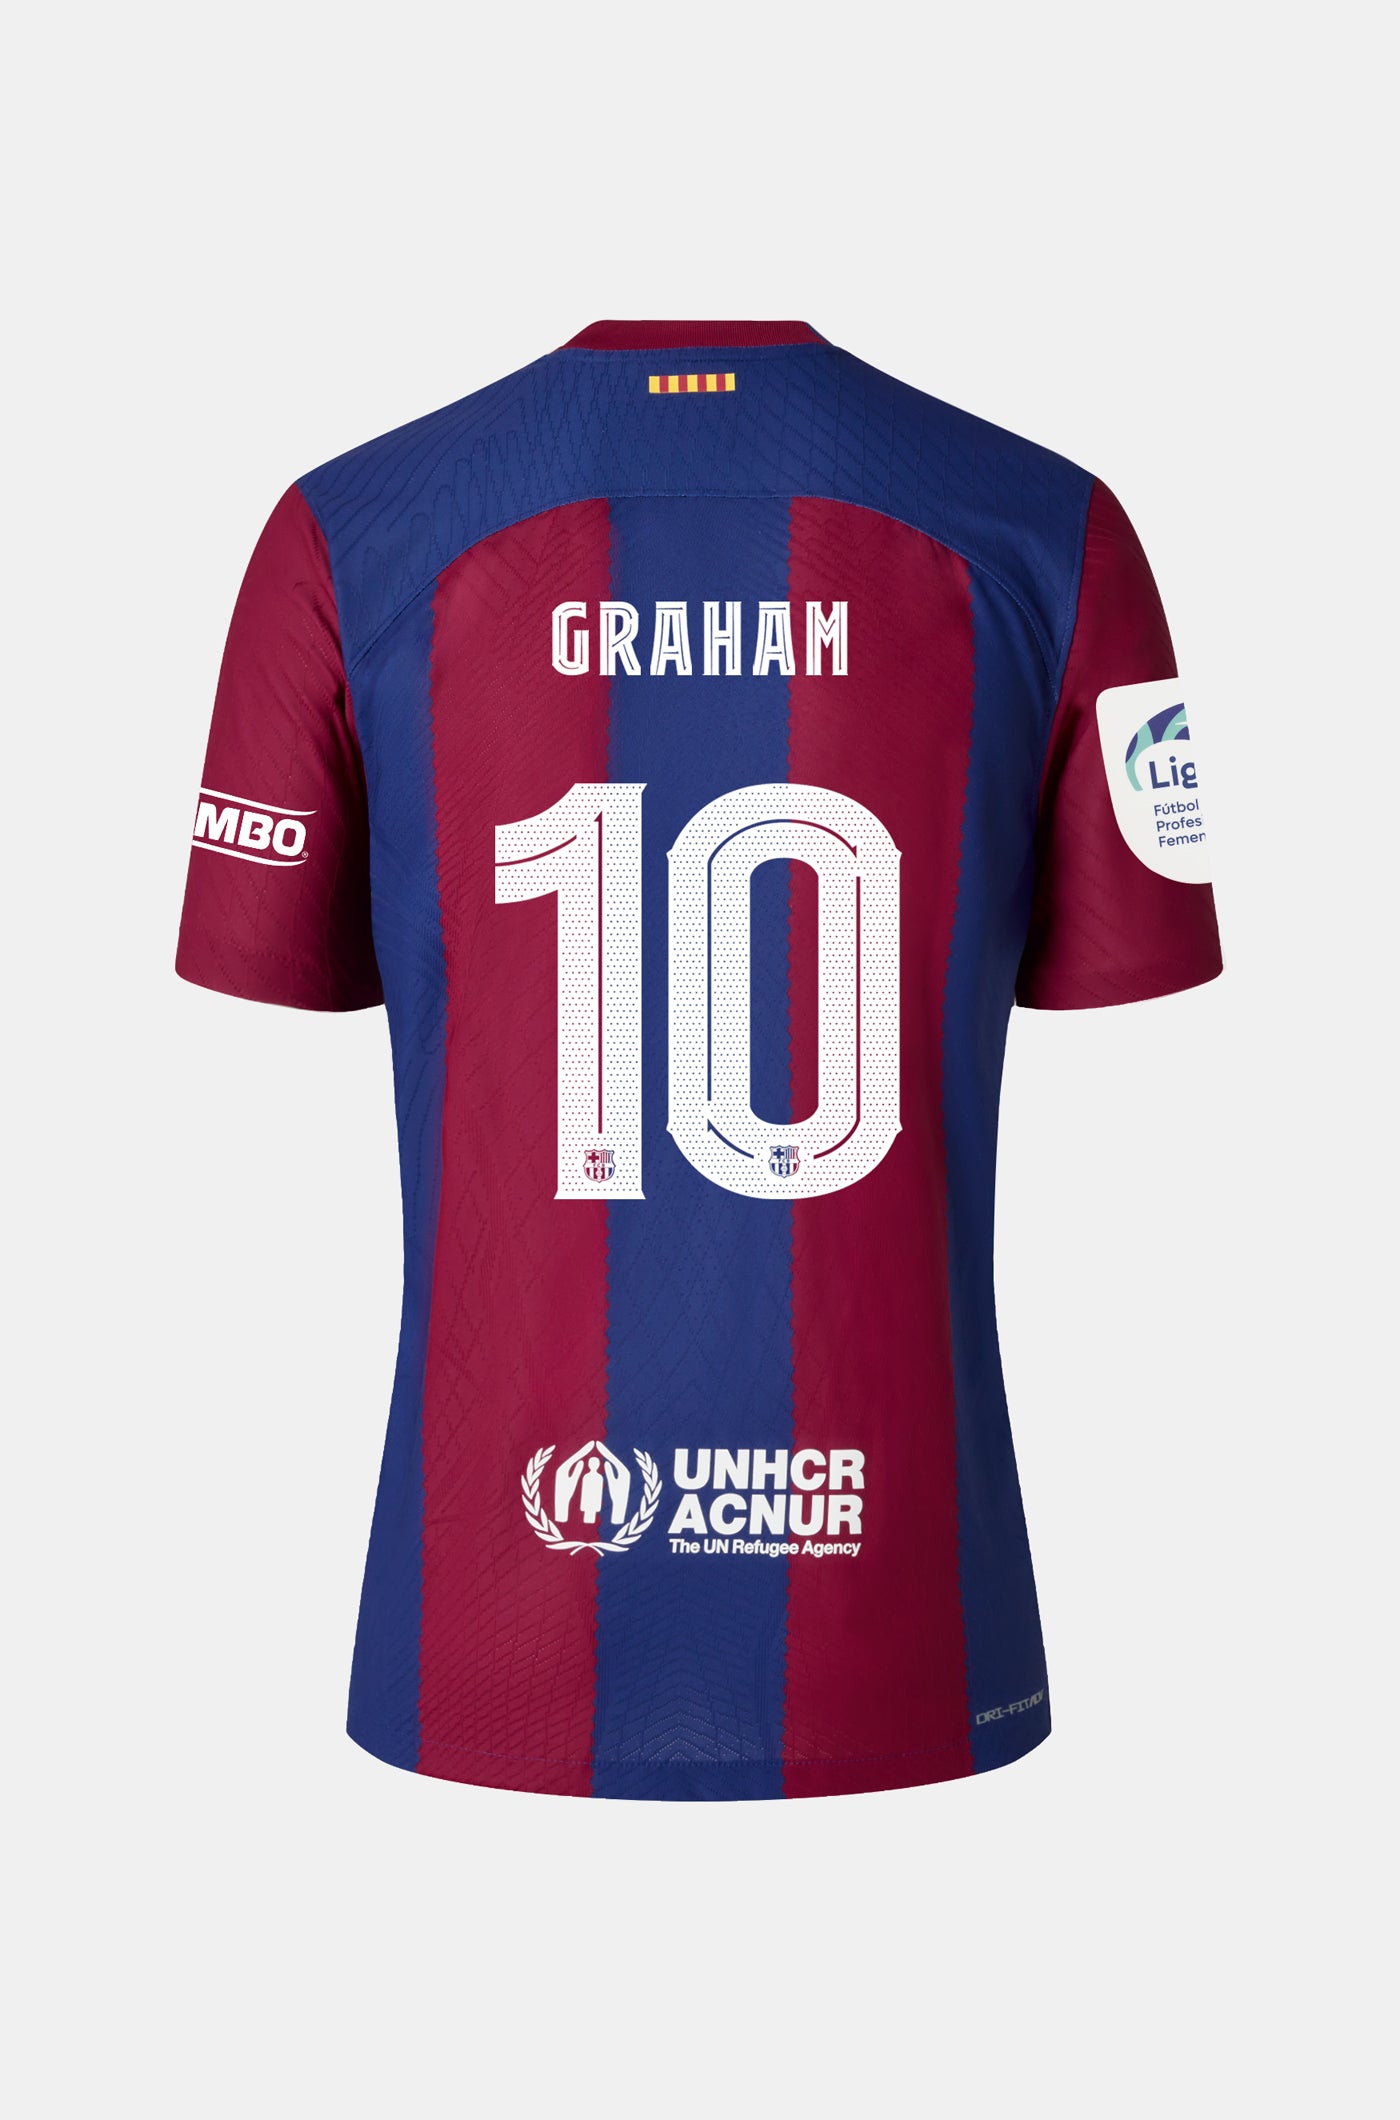 Liga F FC Barcelona Home Shirt 23/24 Player's Edition - Women - GRAHAM